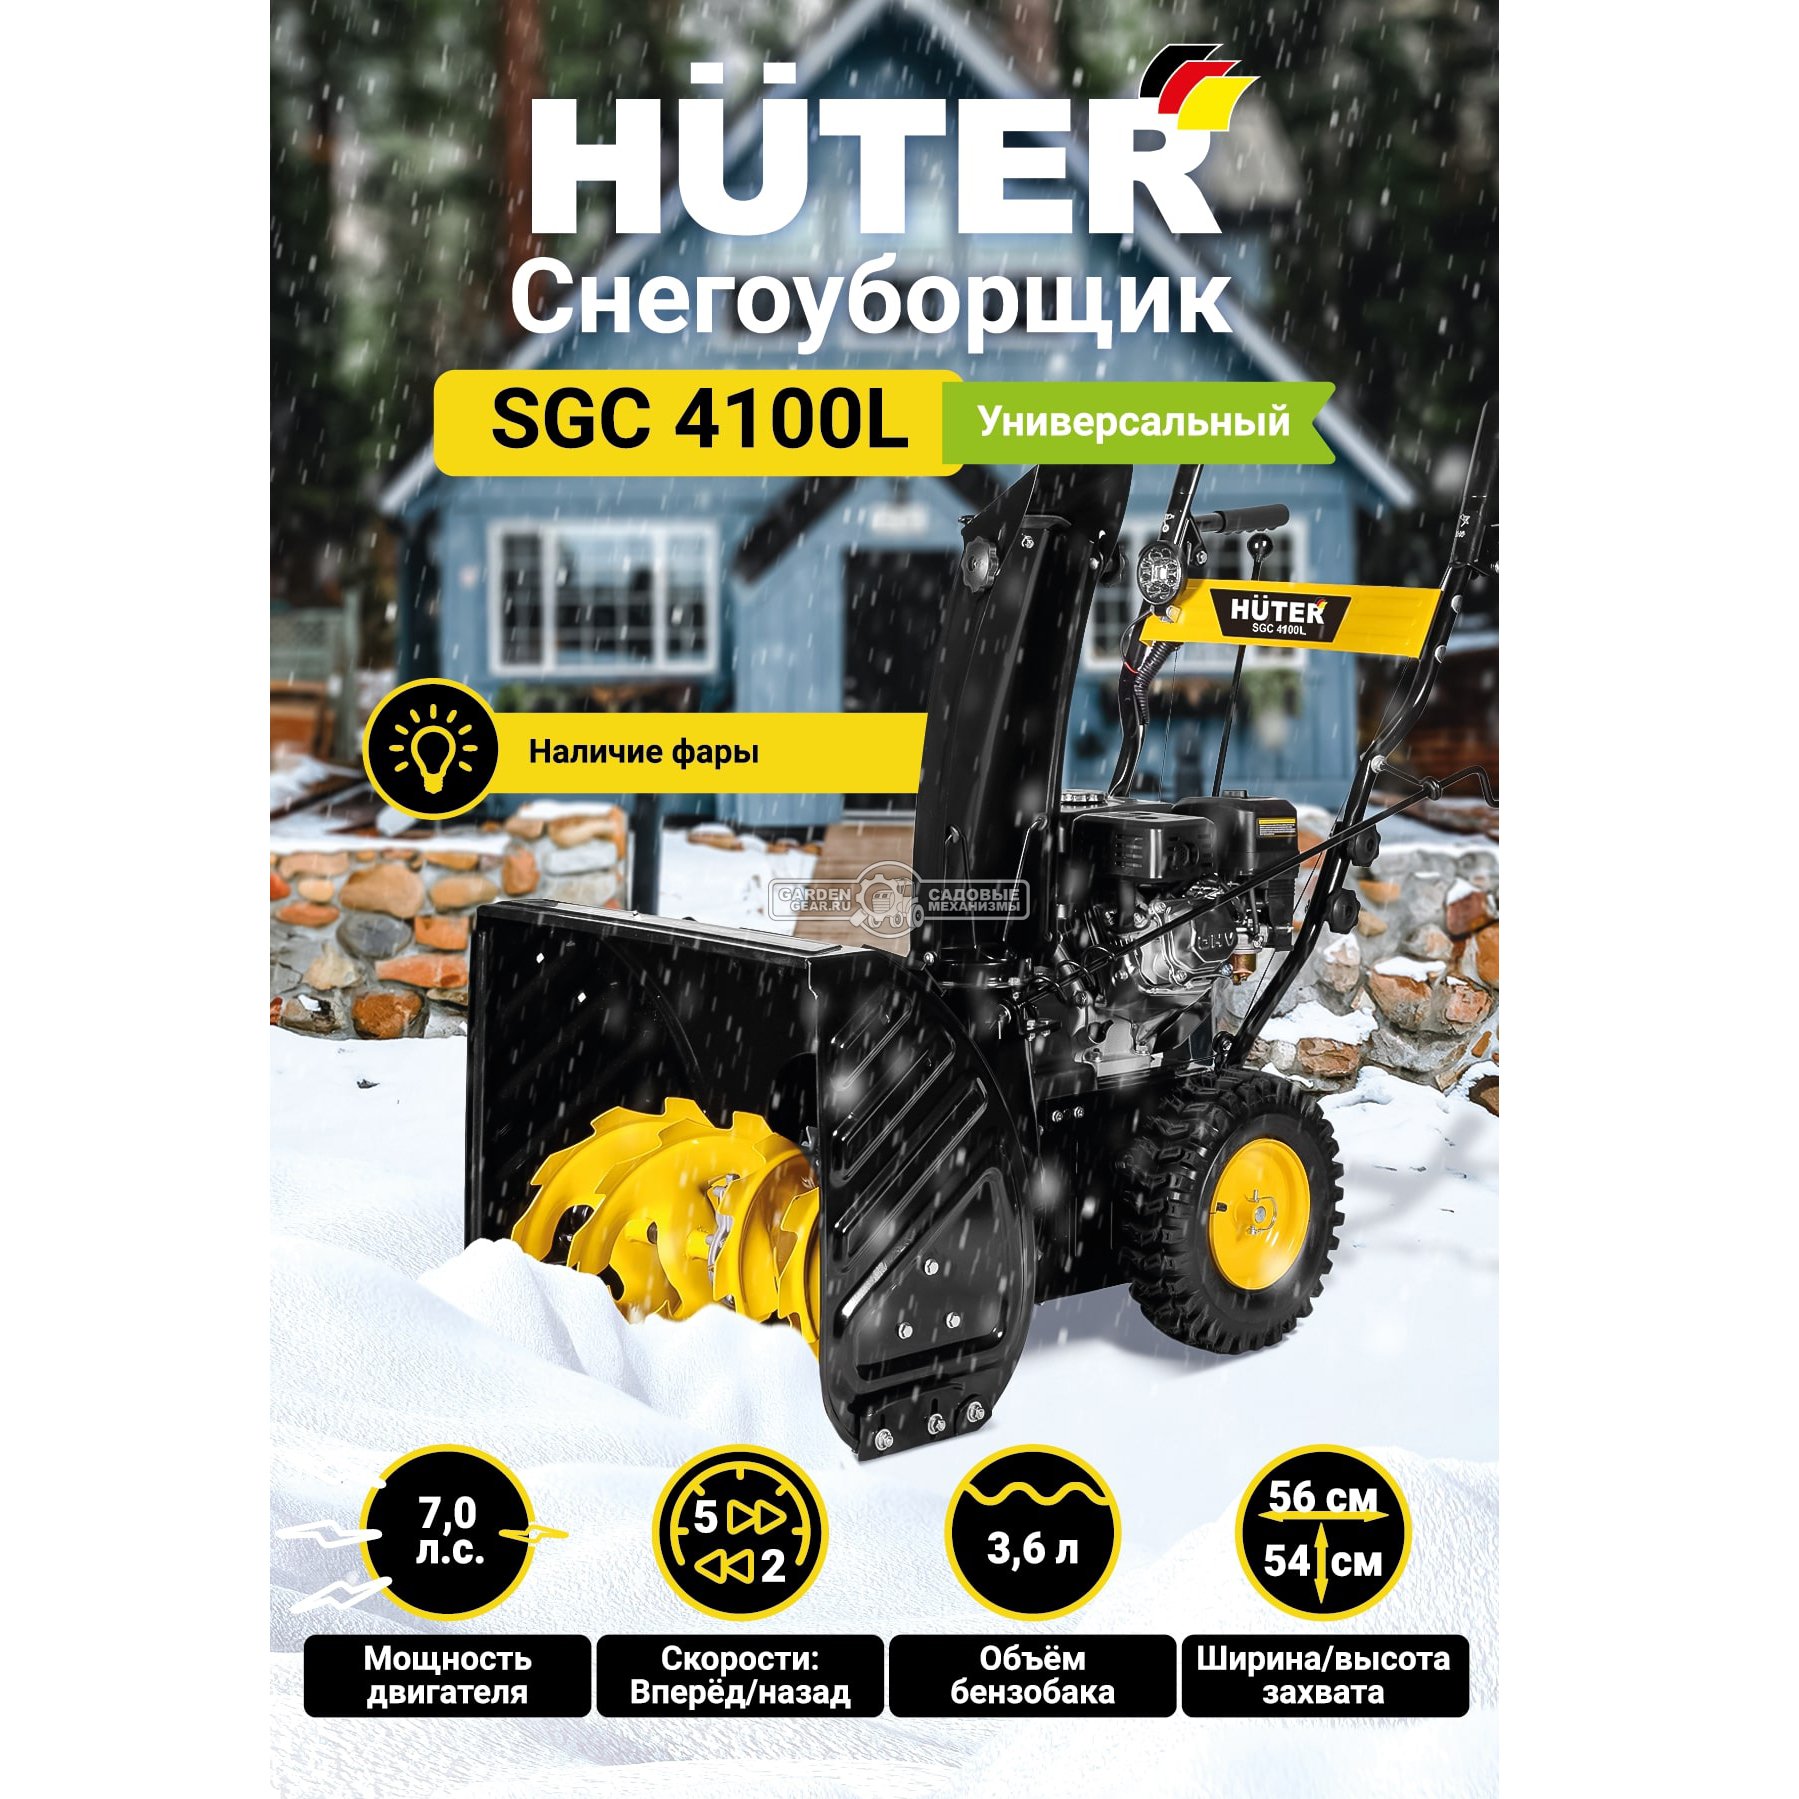 Снегоуборщик Huter SGC 4100L (PRC, 56 см., Huter, 6.5 л.с., фара, скорости 5/2, 72 кг)